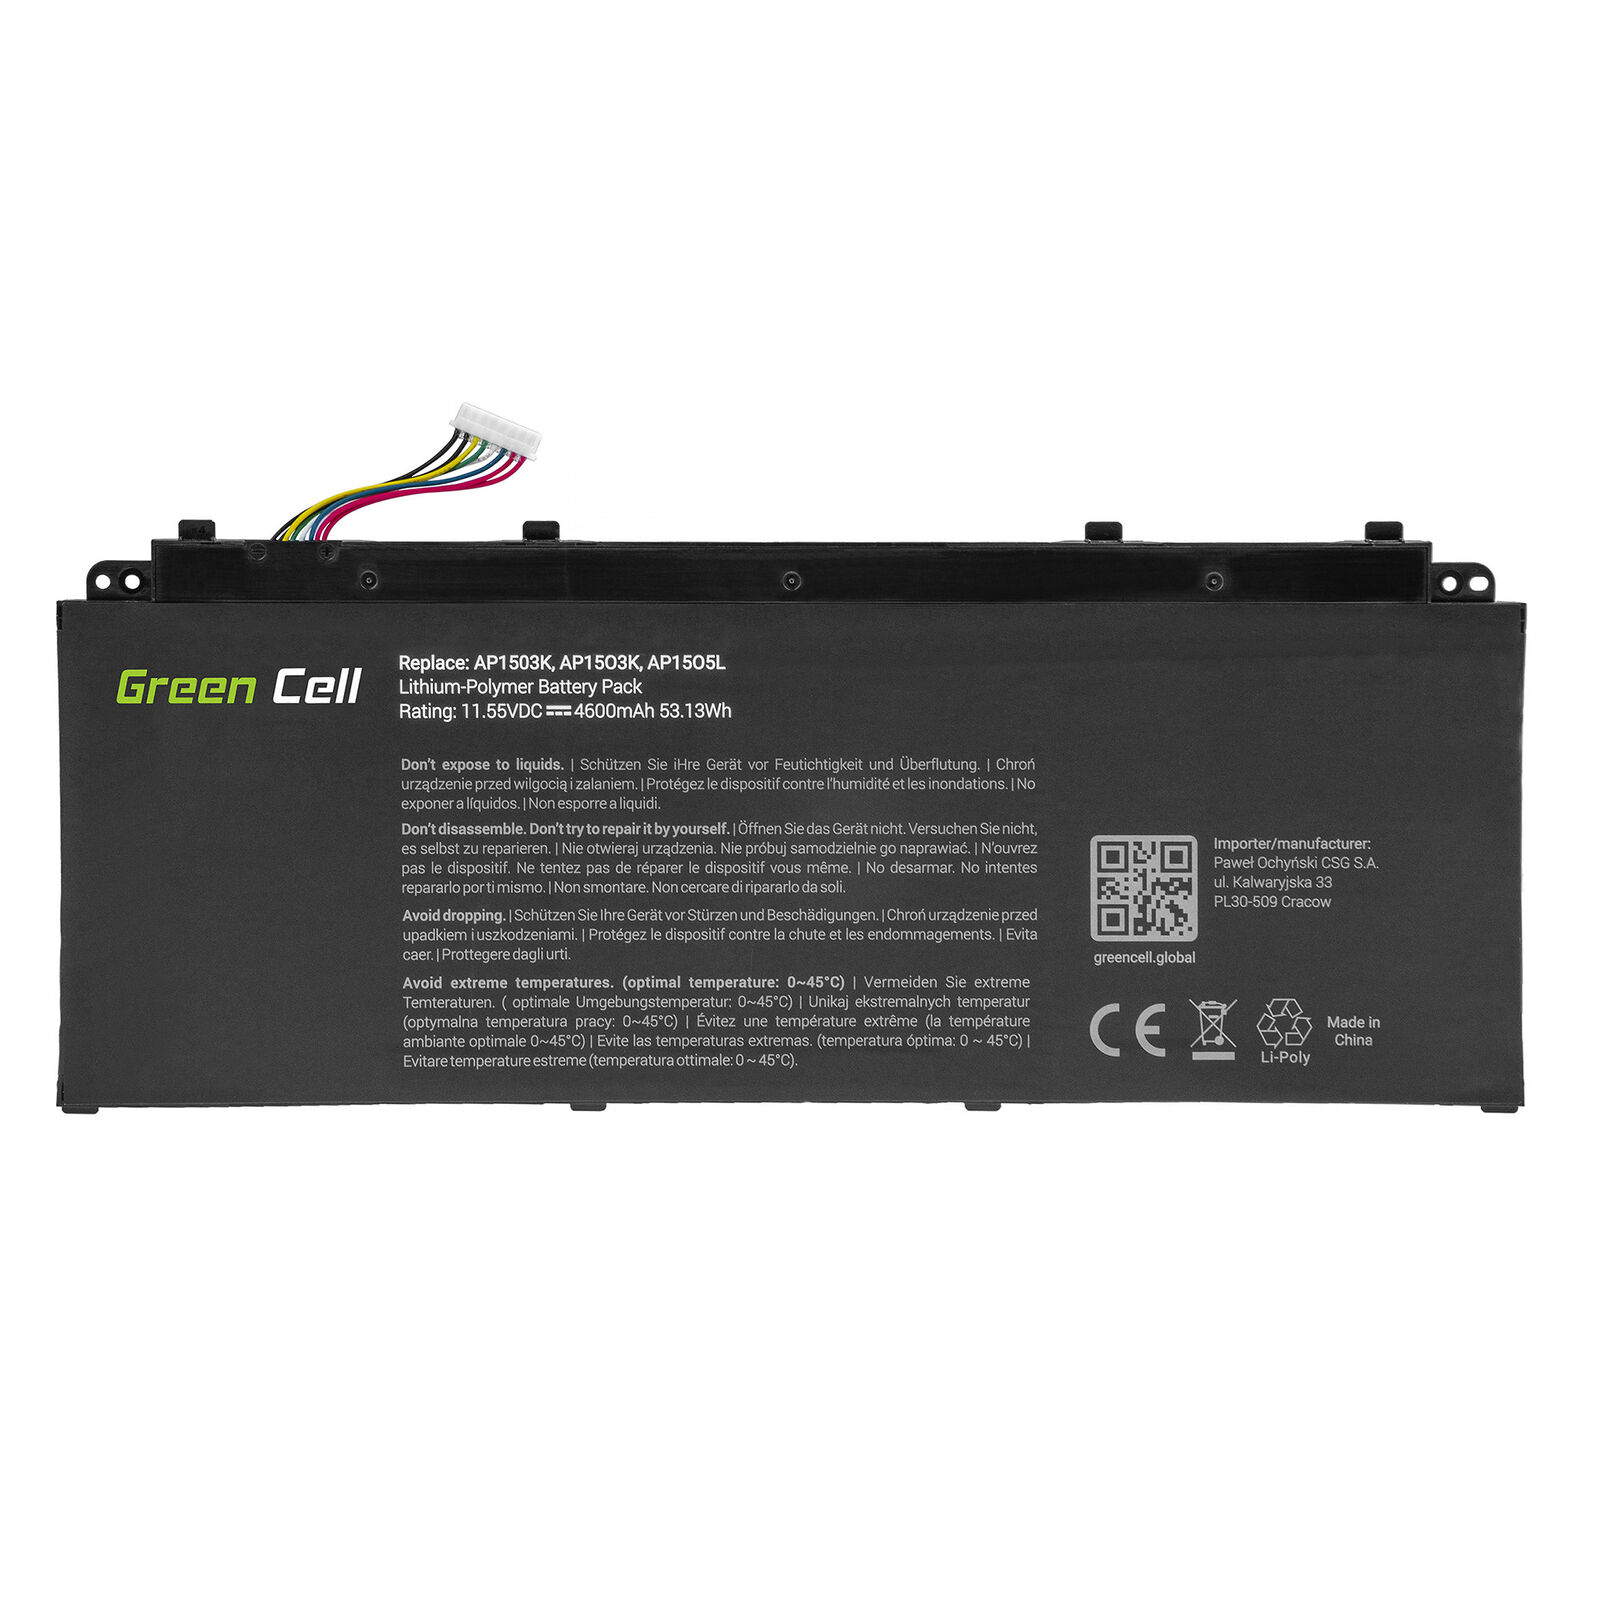 Batterie pour AP1503K AP1505L AP15O3K AP15O5L Acer Aspire S 13 Swift 1 Swift 5(compatible)